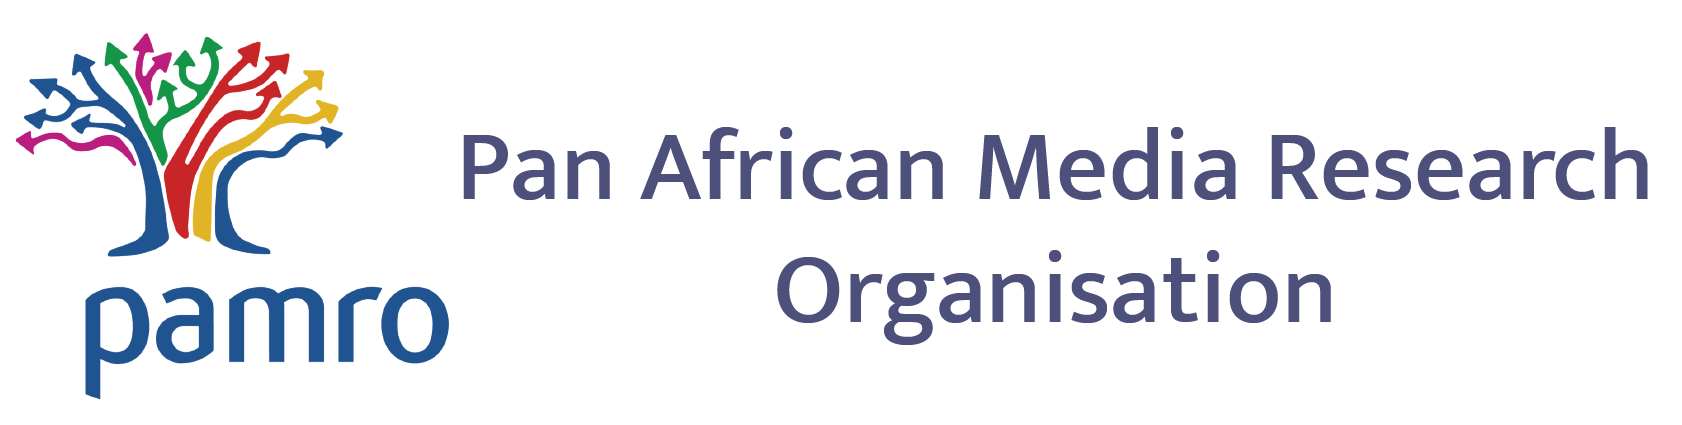 The Pan African Media Research Organisation (PAMRO)